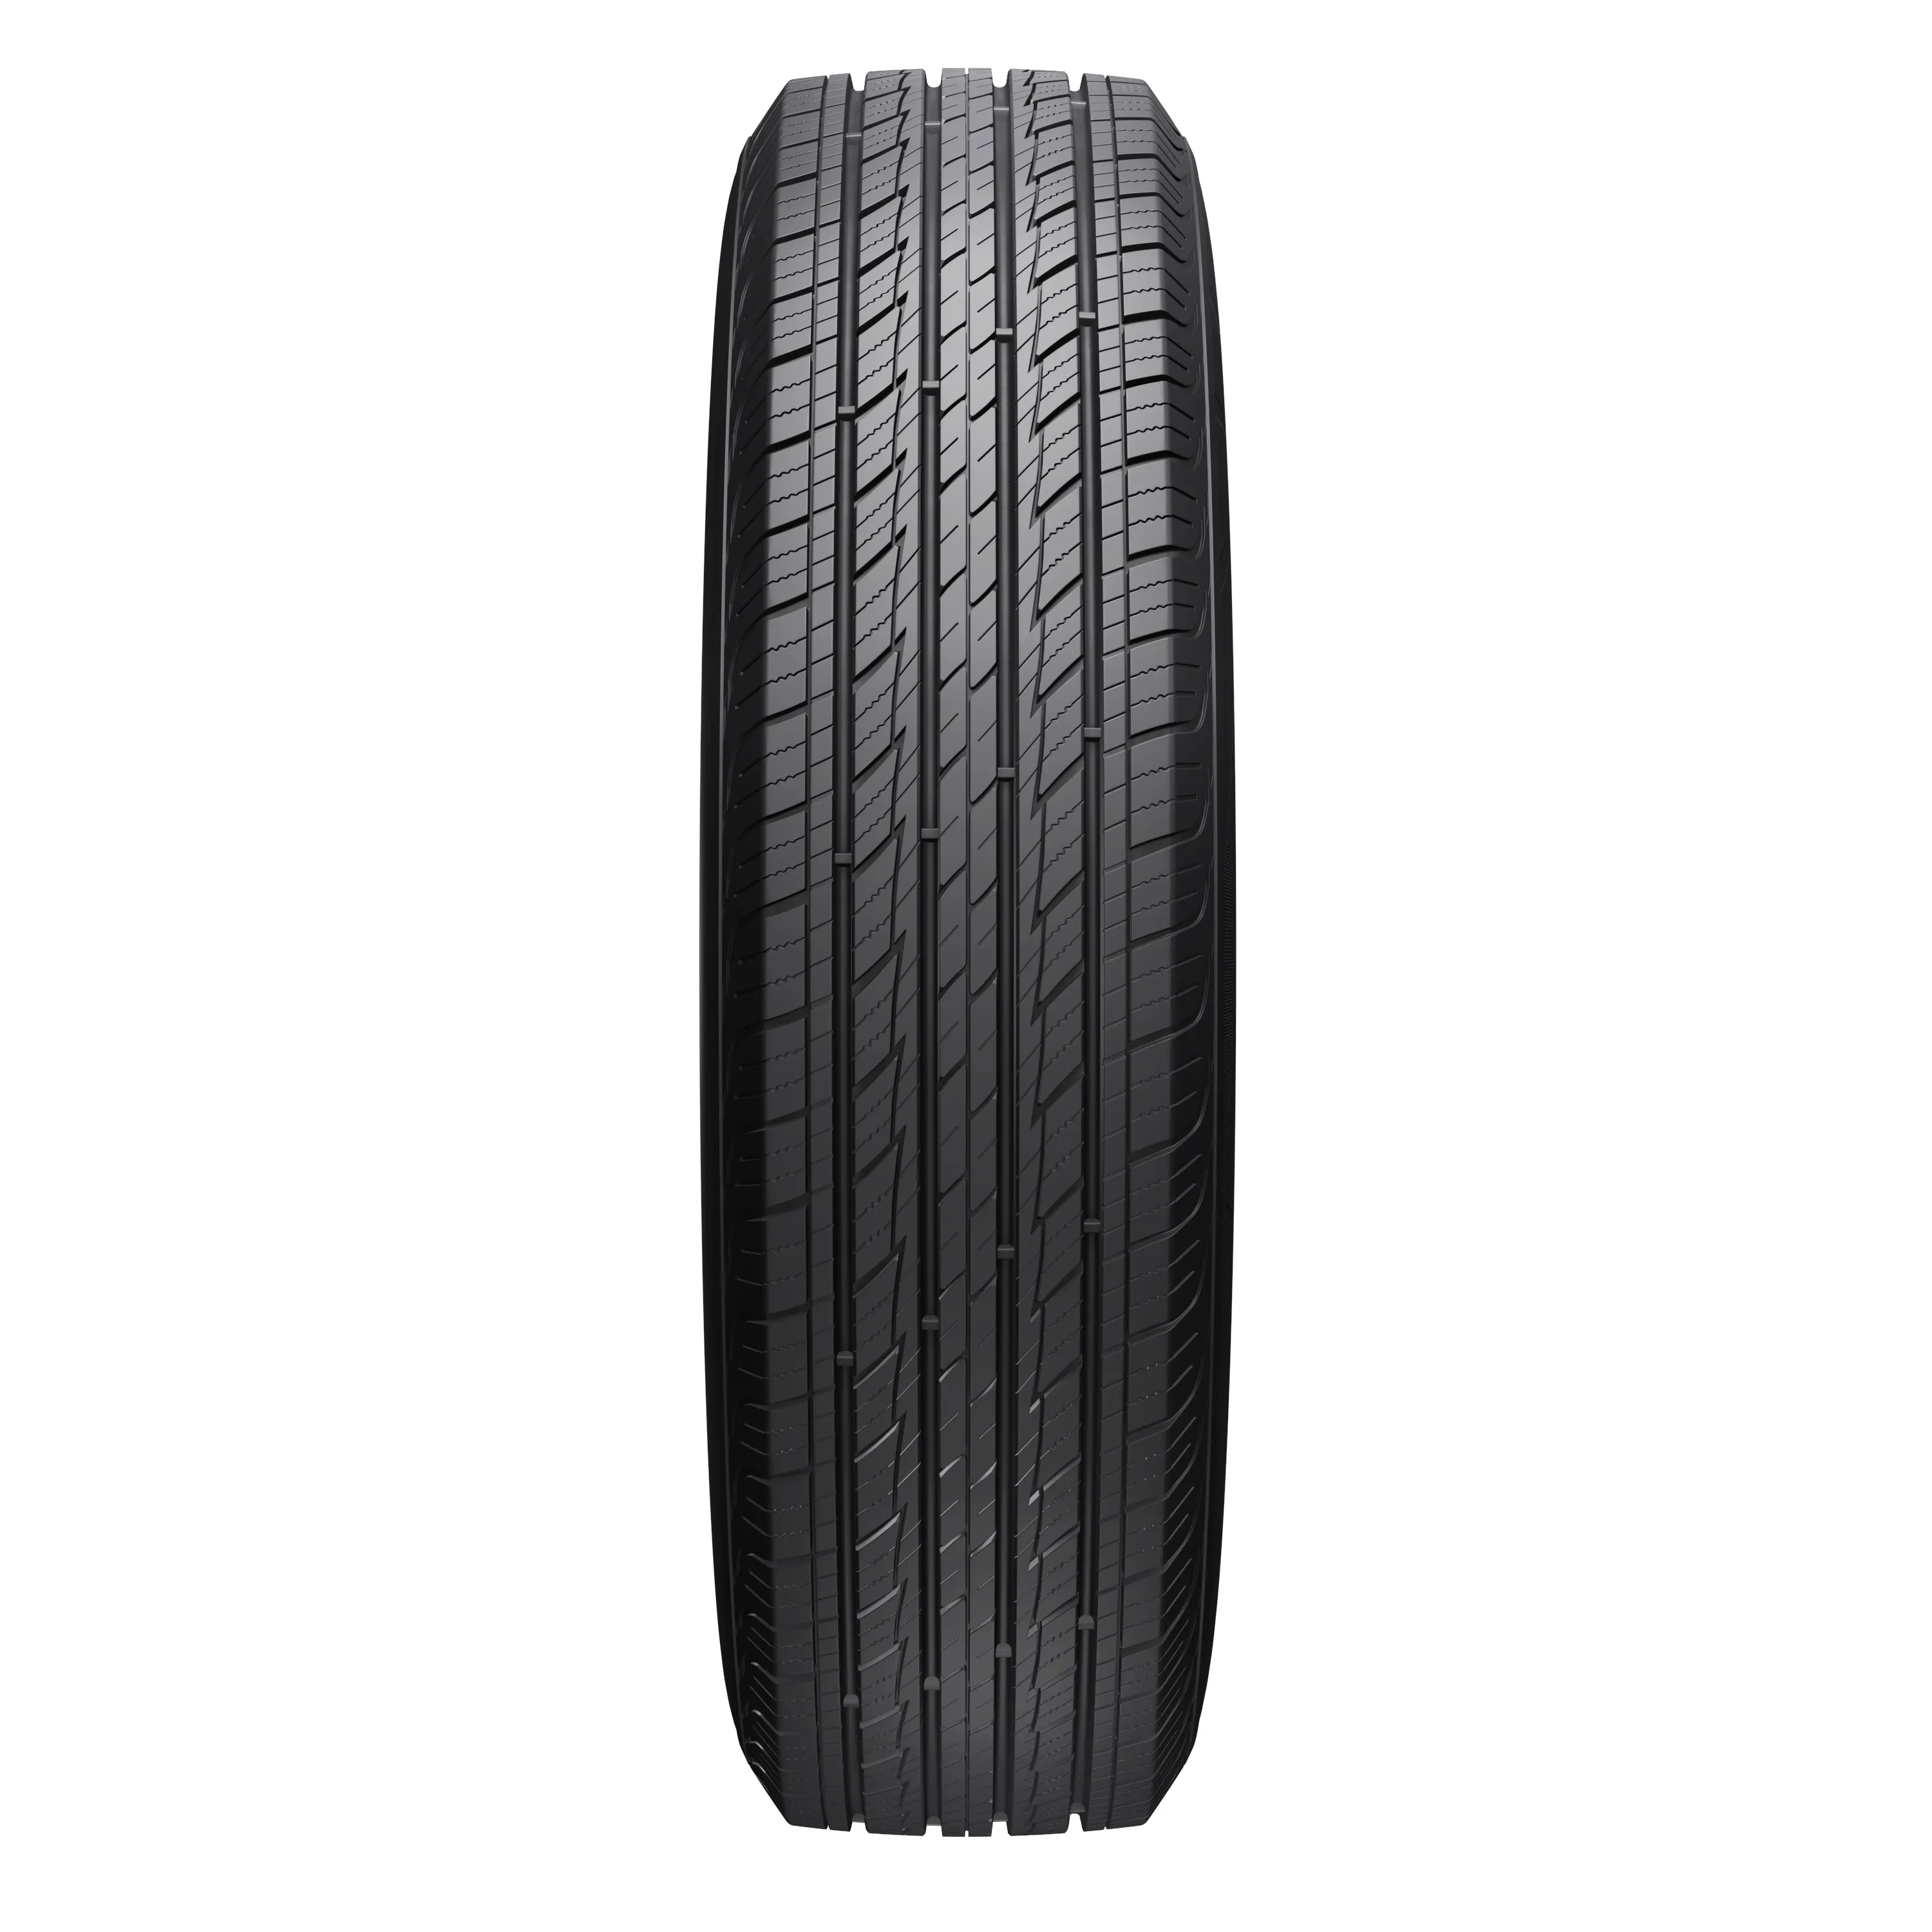 Pneu preço de fábrica Doublestar Horizon Headway Aosen pneus de carro UHP HP AT MT LTR pneu 235/60R18 275/60R20